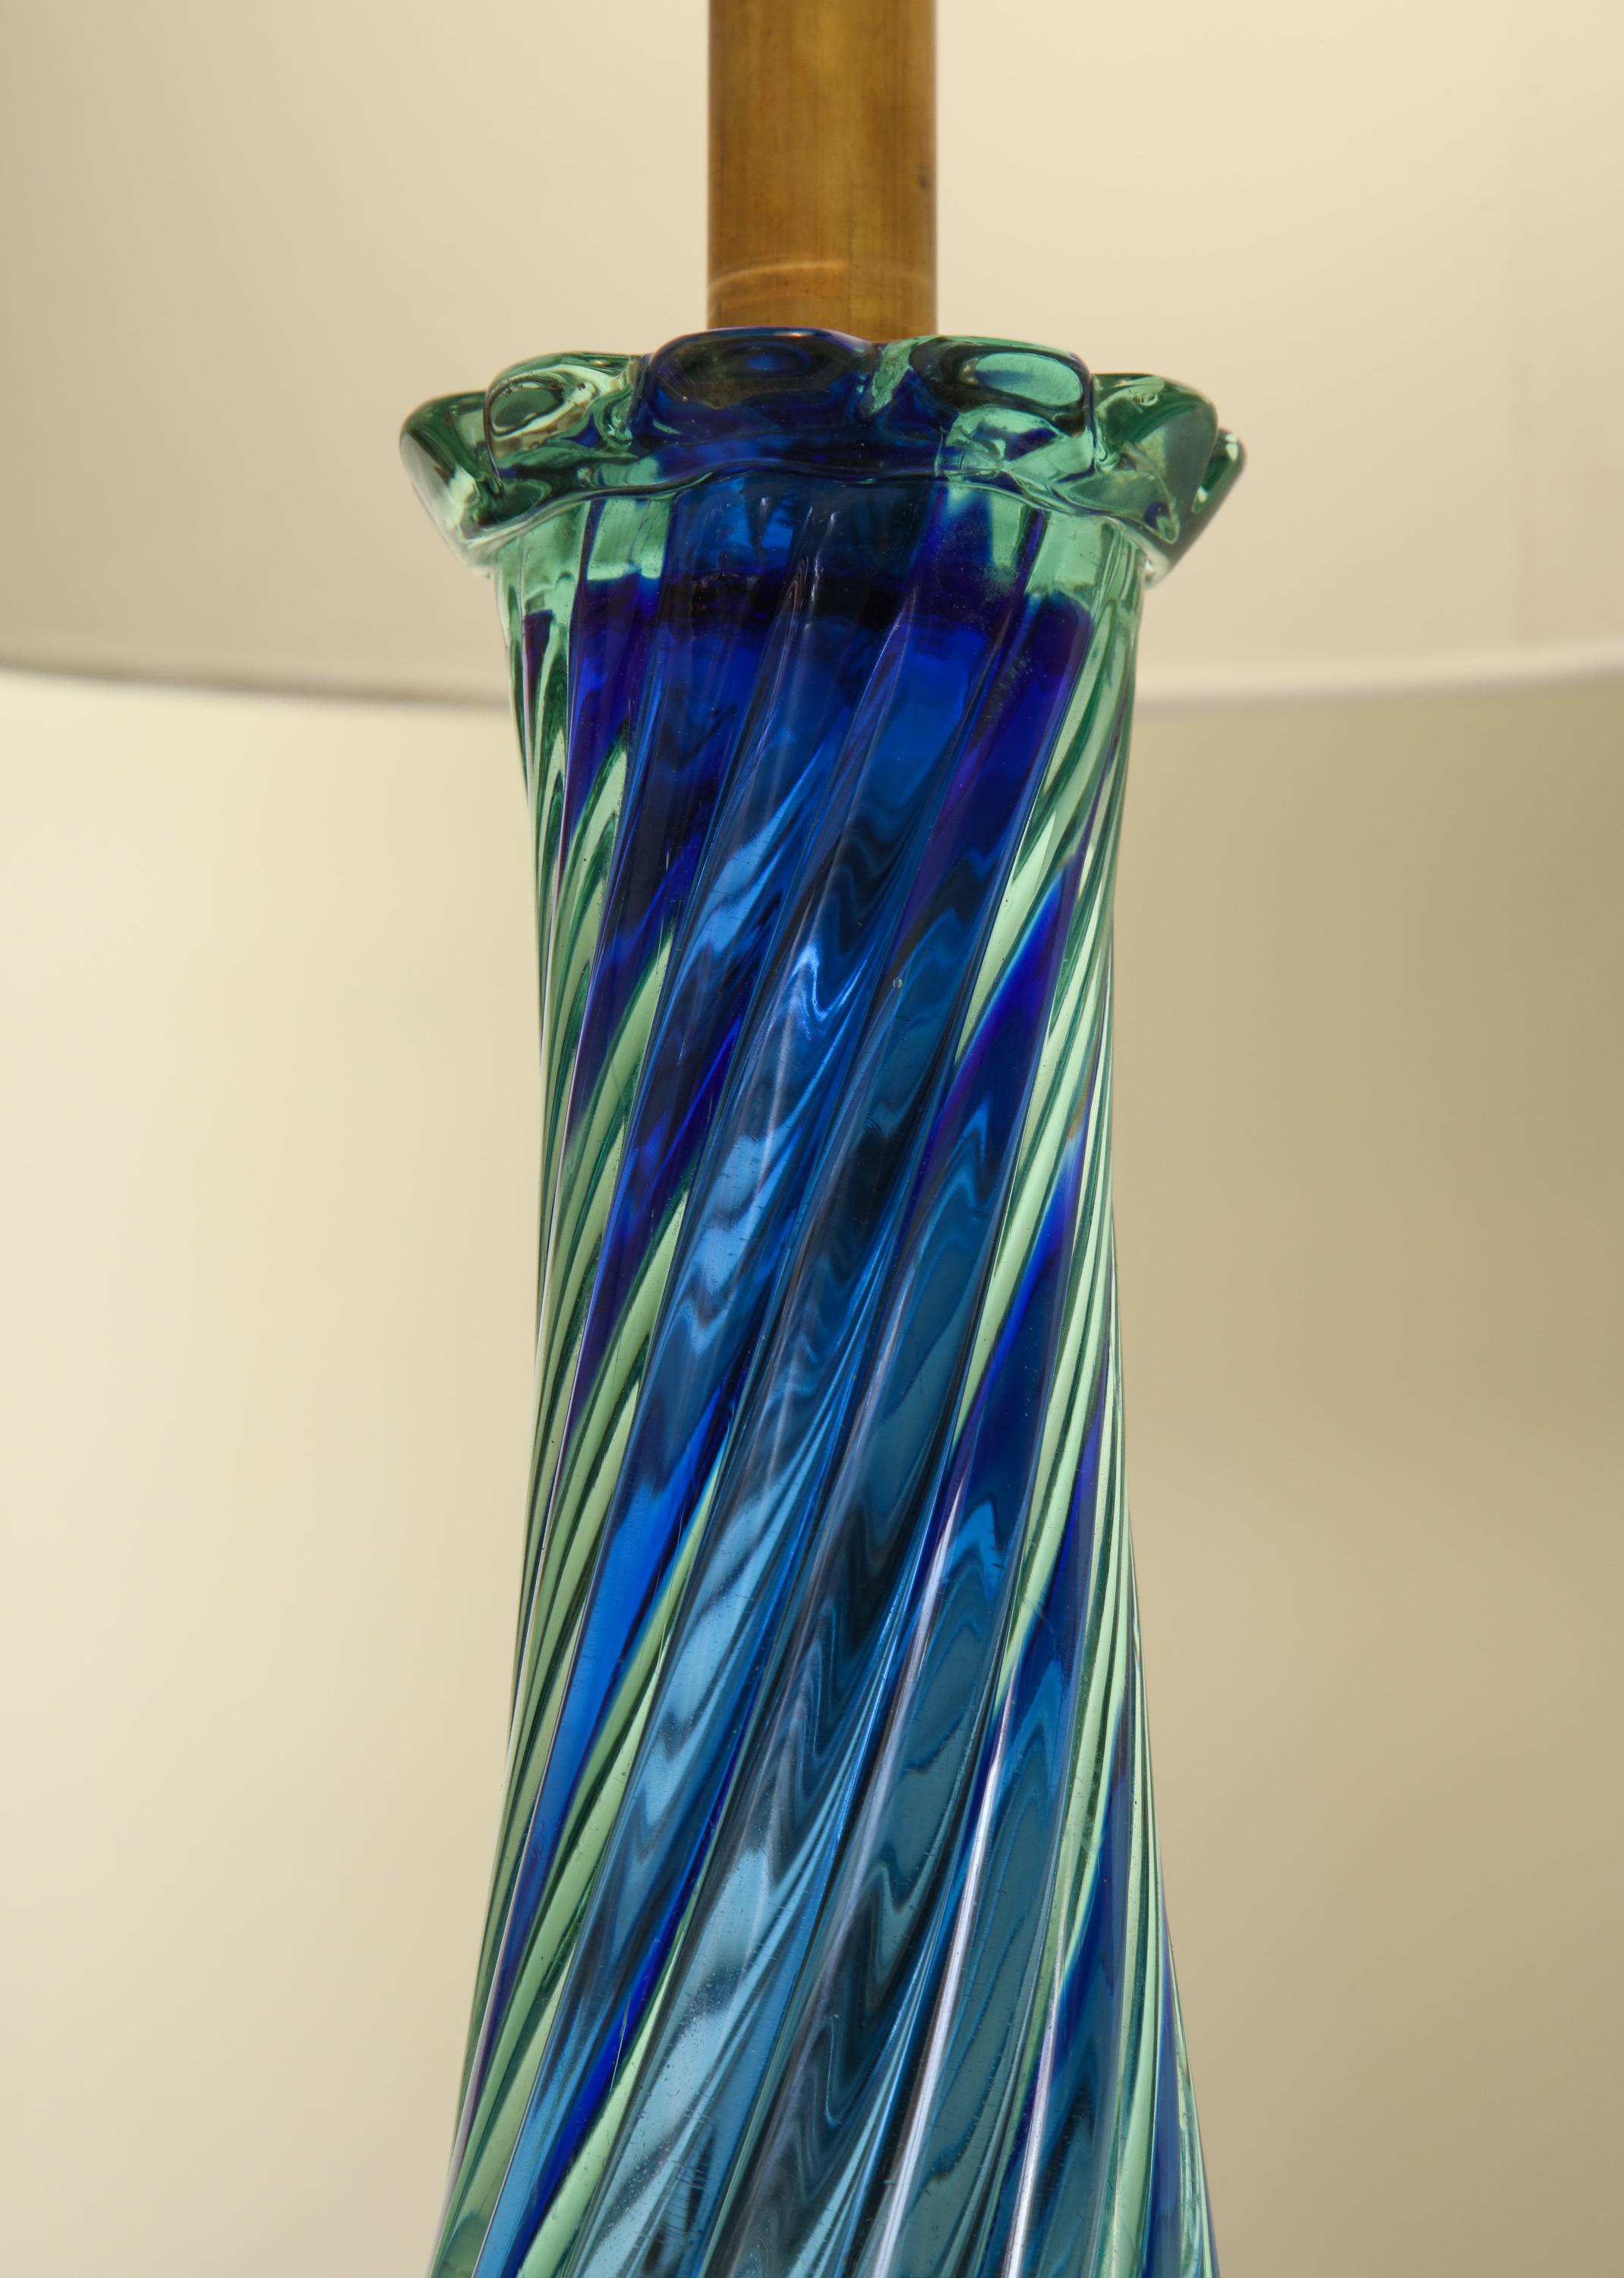 Seguso Table Lamp Murano Art Glass Mid-Century Modern Italy, 1950s For Sale 2